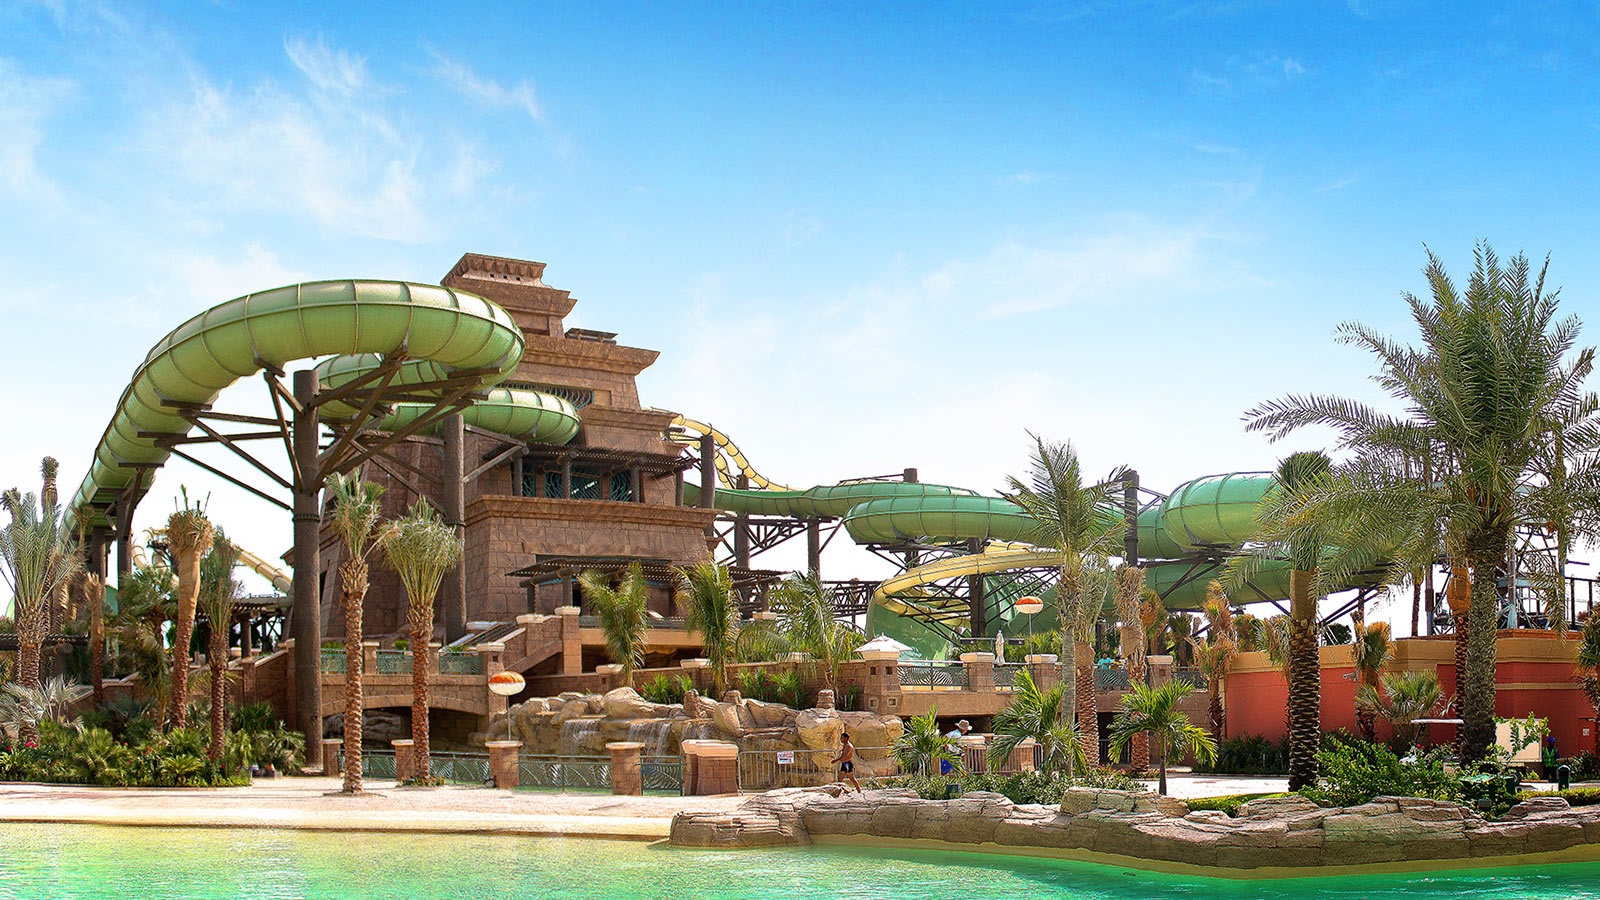 Image Overview, Aquaventure Waterpark Atlantis The Palm, Dubai, UAE